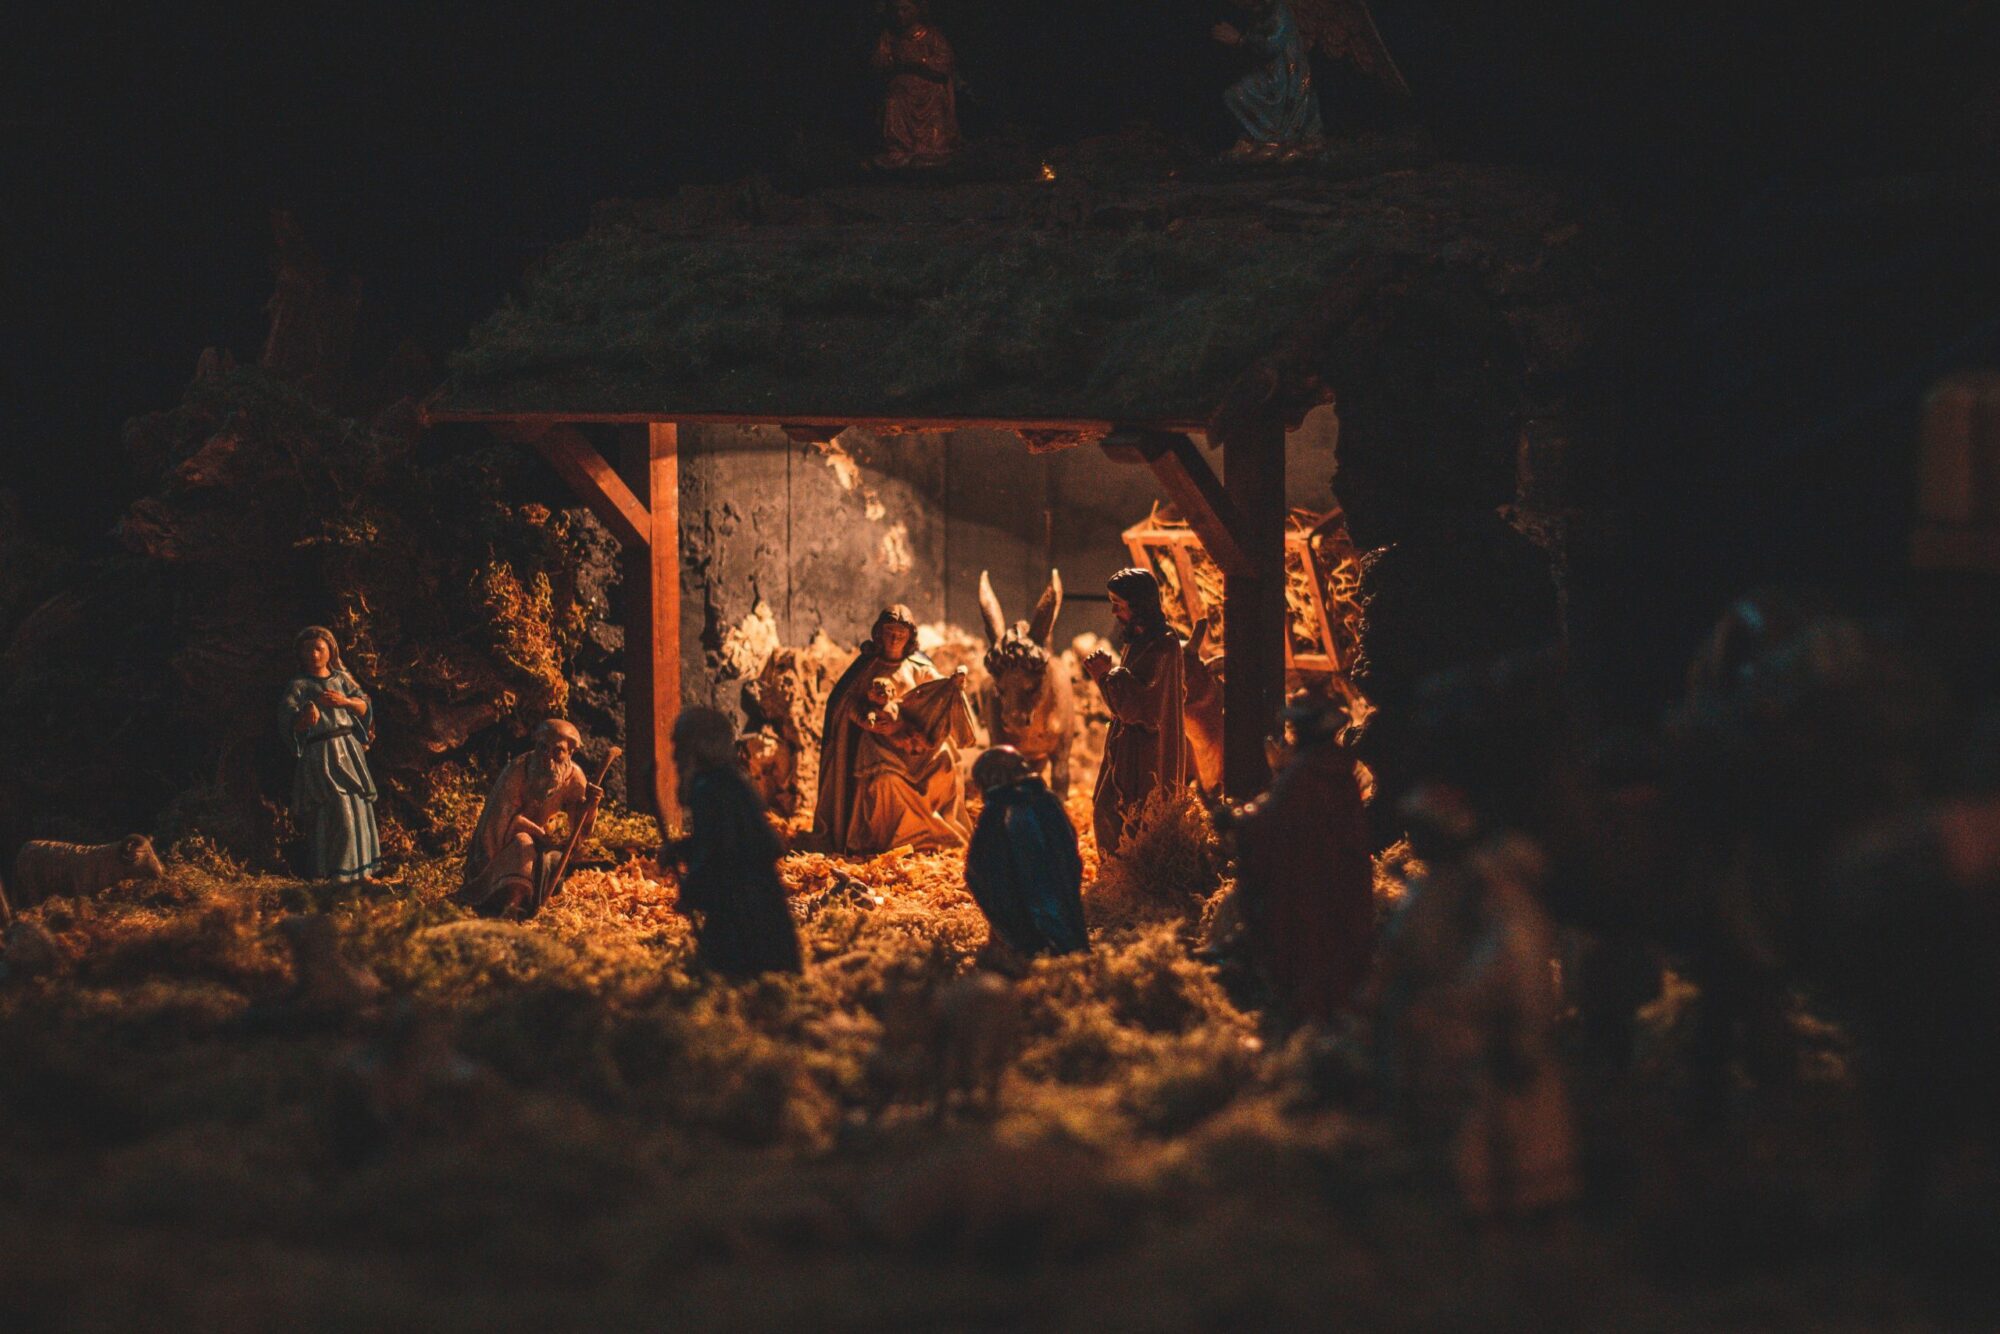 The Nativity Scene depicting St Andrews Christmas Novena Prayer that ends on Christmas Eve.